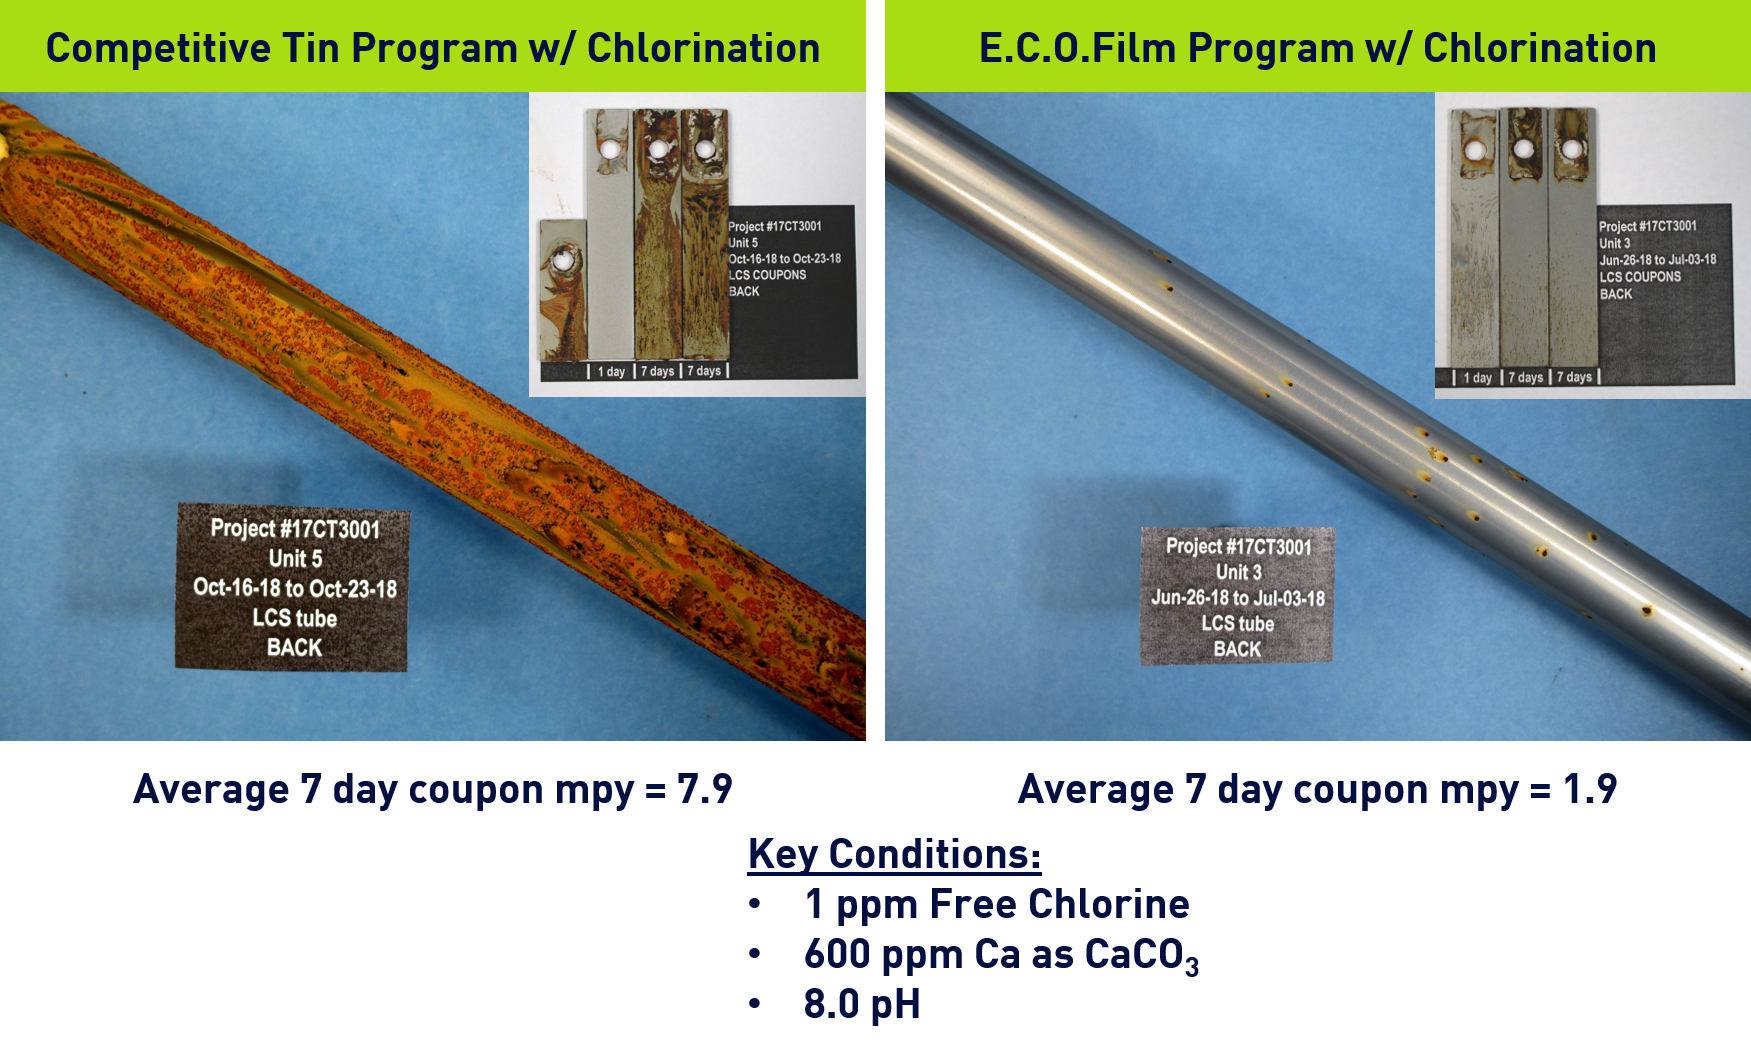 E.C.O.Film vs Competitive Tin Program